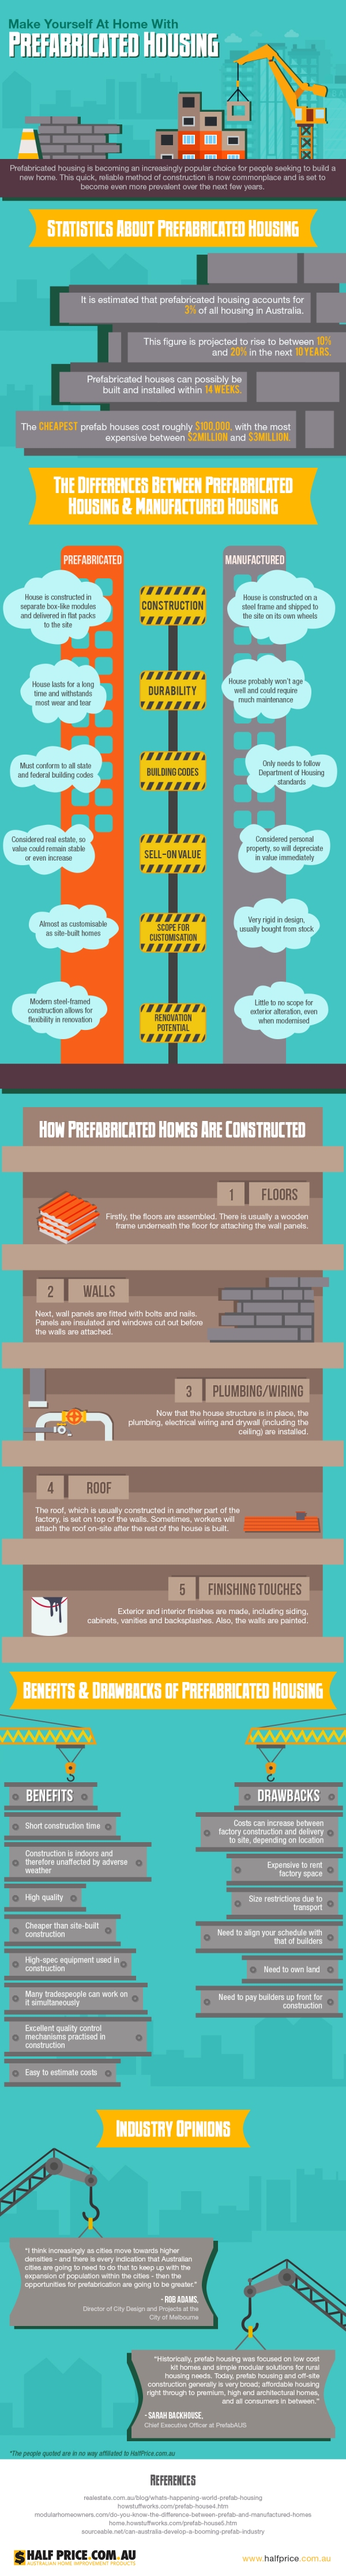 Prefabricated housing in Australia infographic.jpg